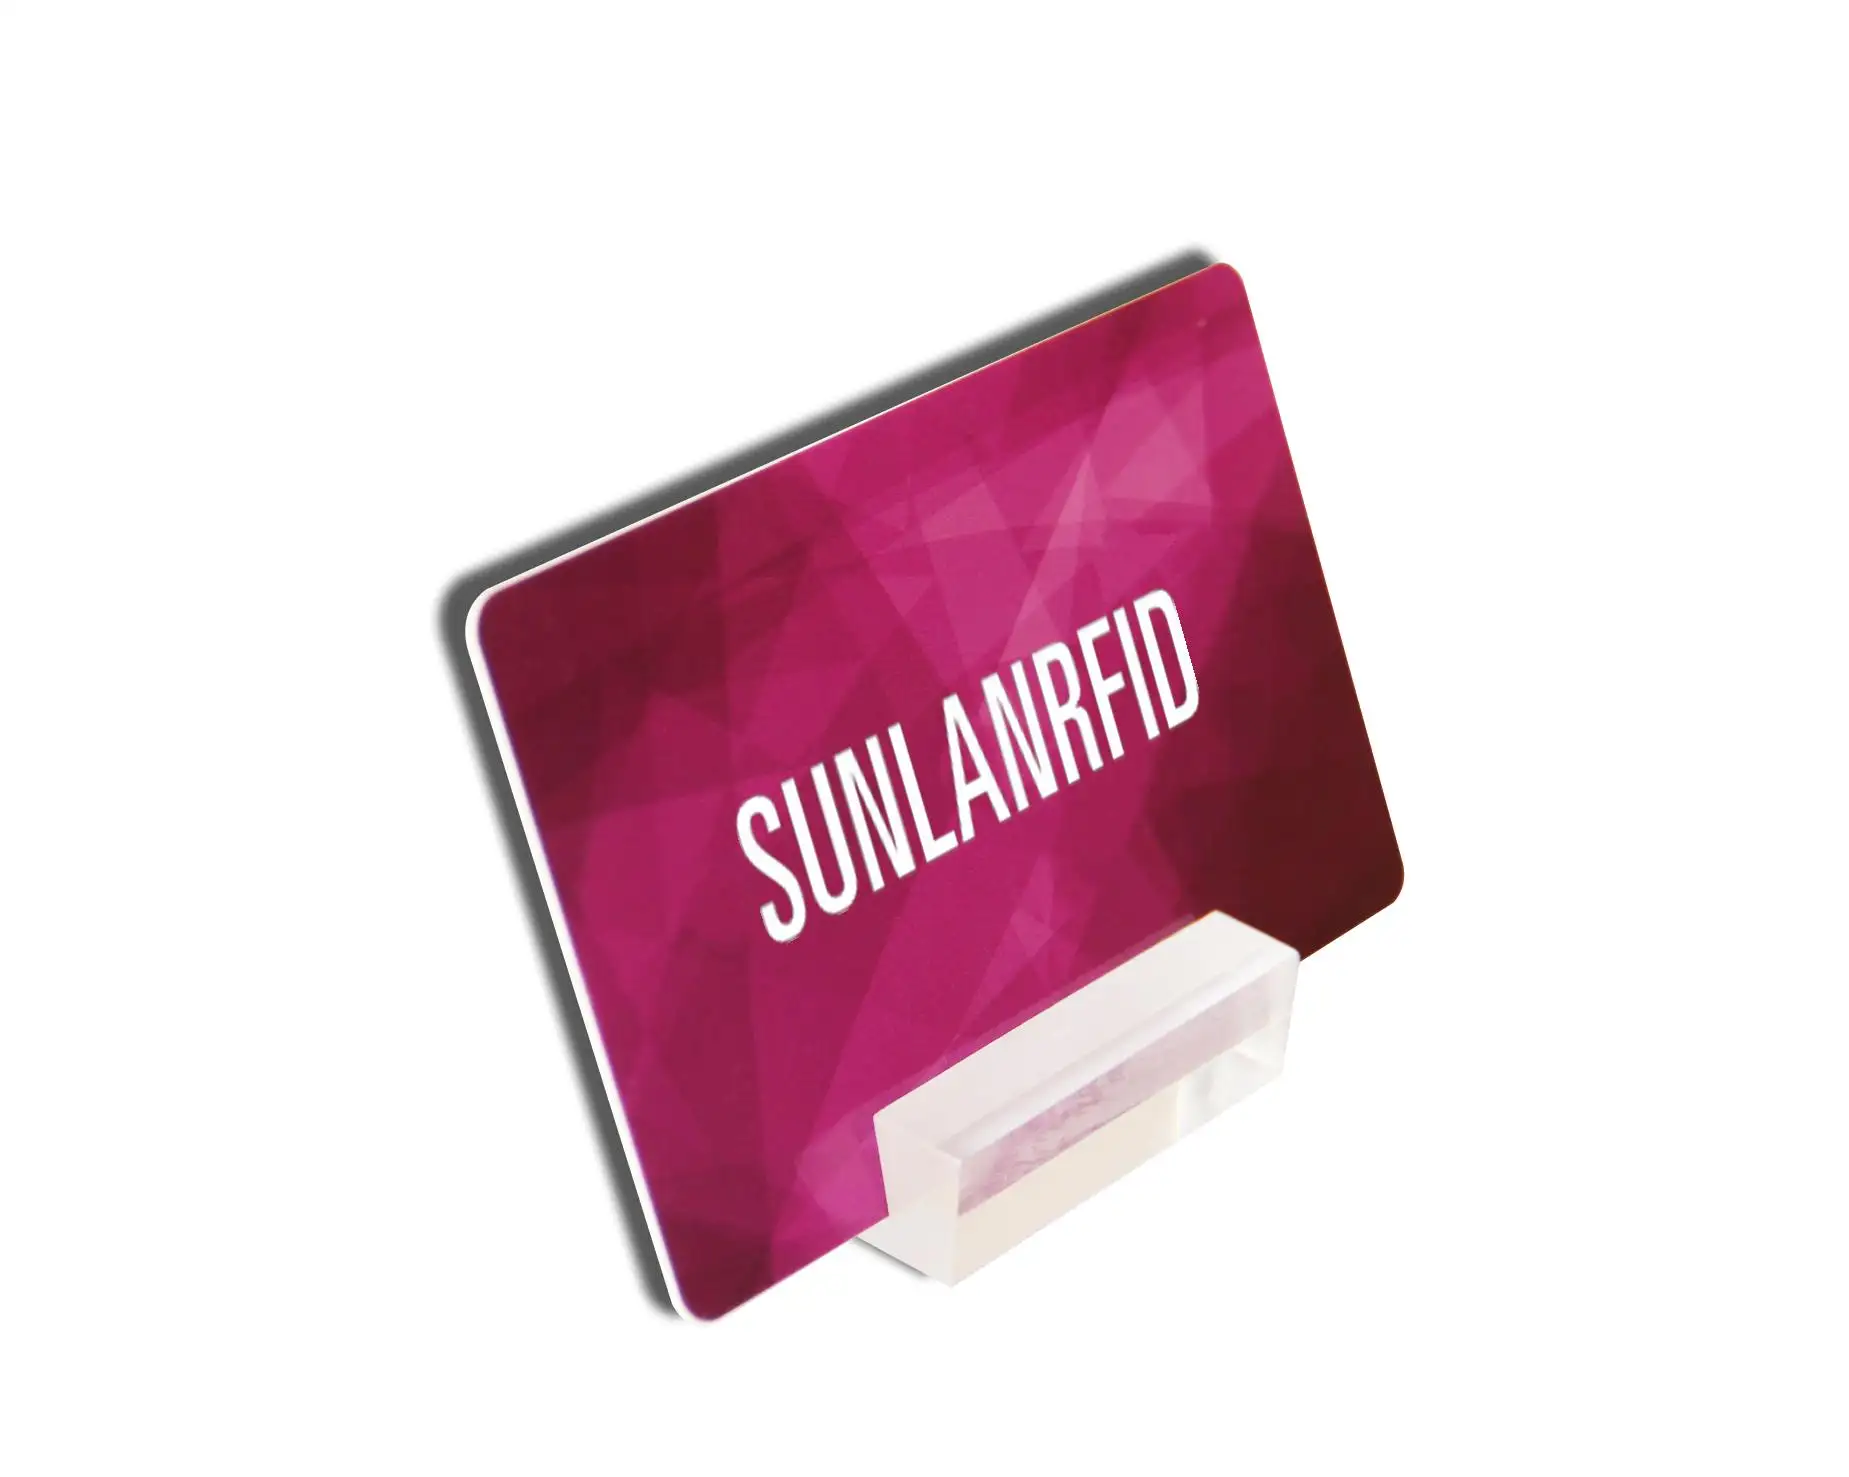 Sunlan 13.56Hz carte Rfid personalizzate Smart Card impermeabile in Pvc per l'iscrizione in palestra